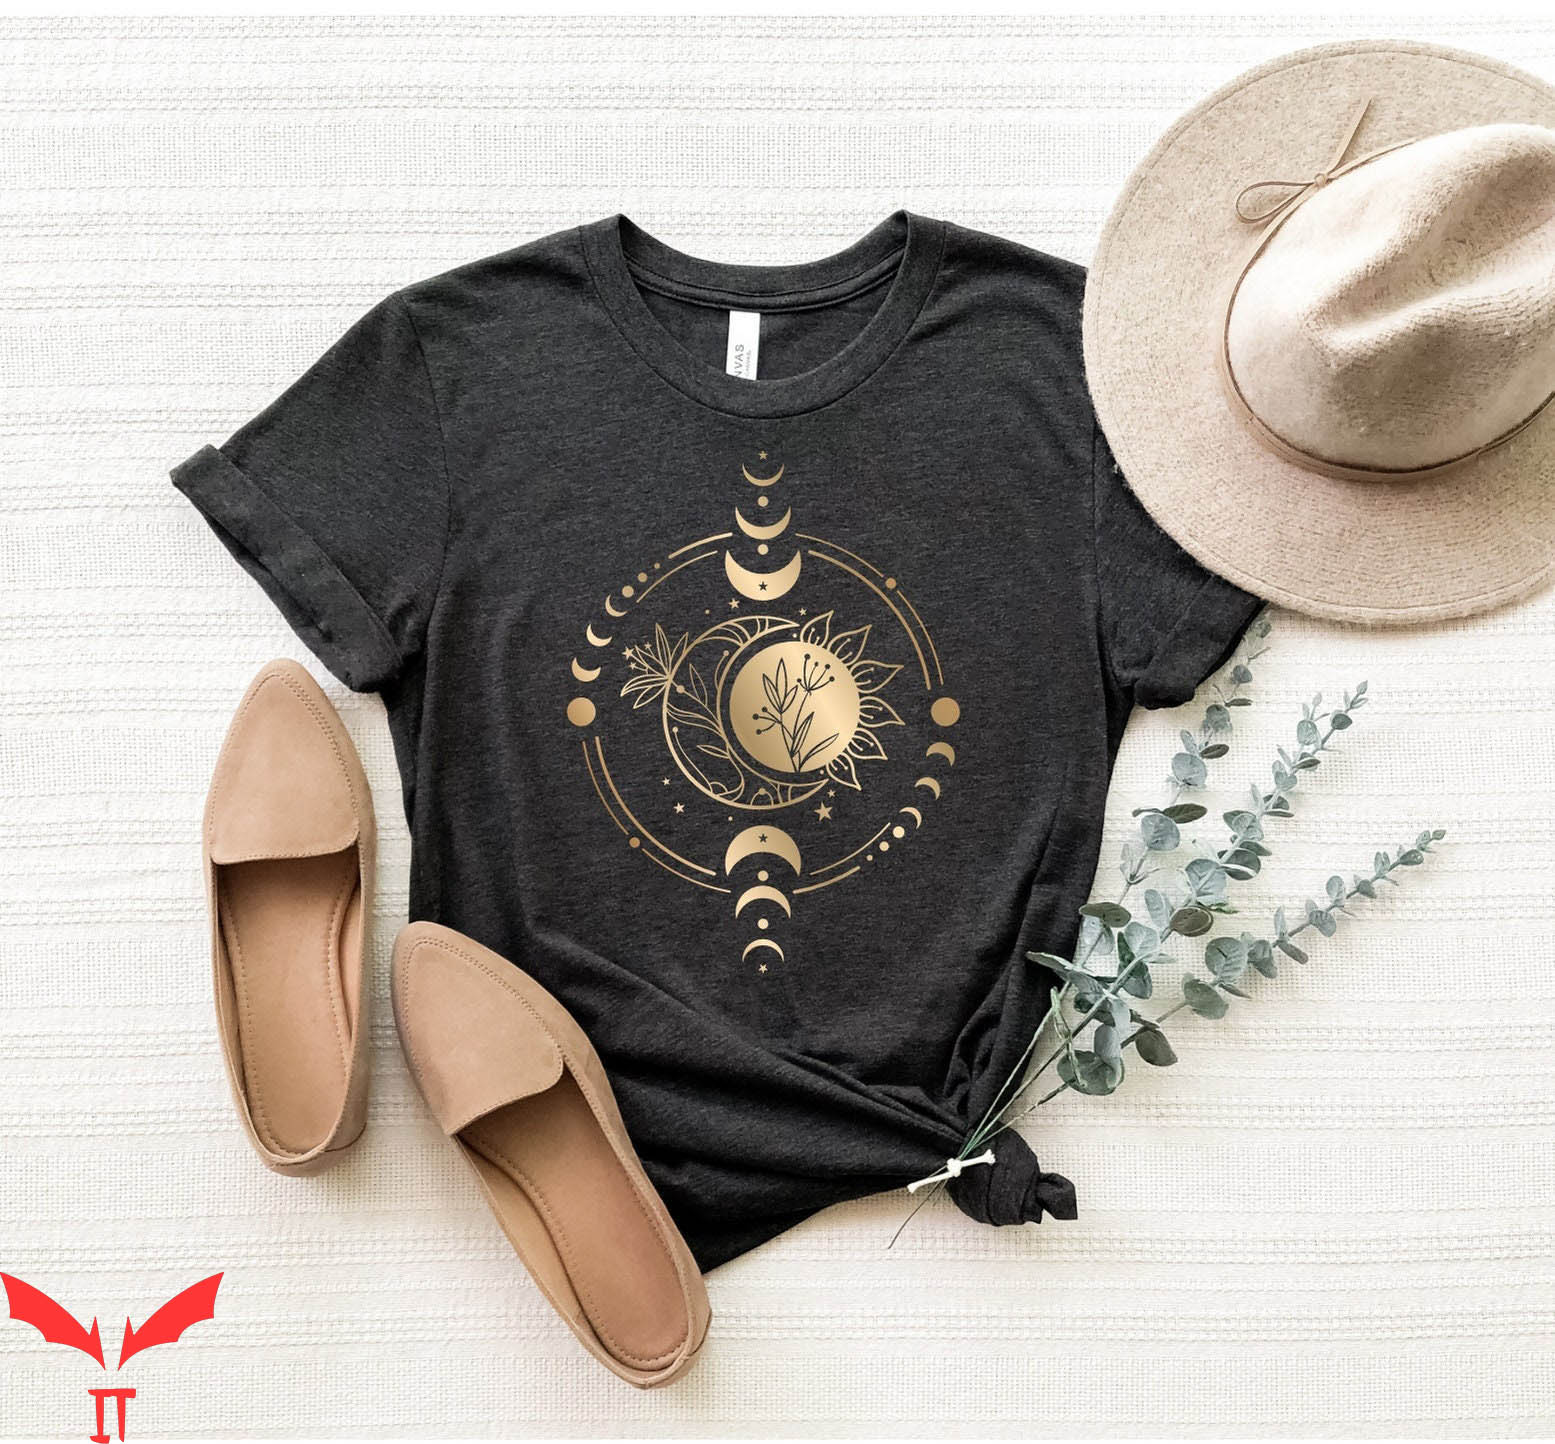 Earthy T-Shirt Mystic Moon And Sun Boho Vintage Shirt